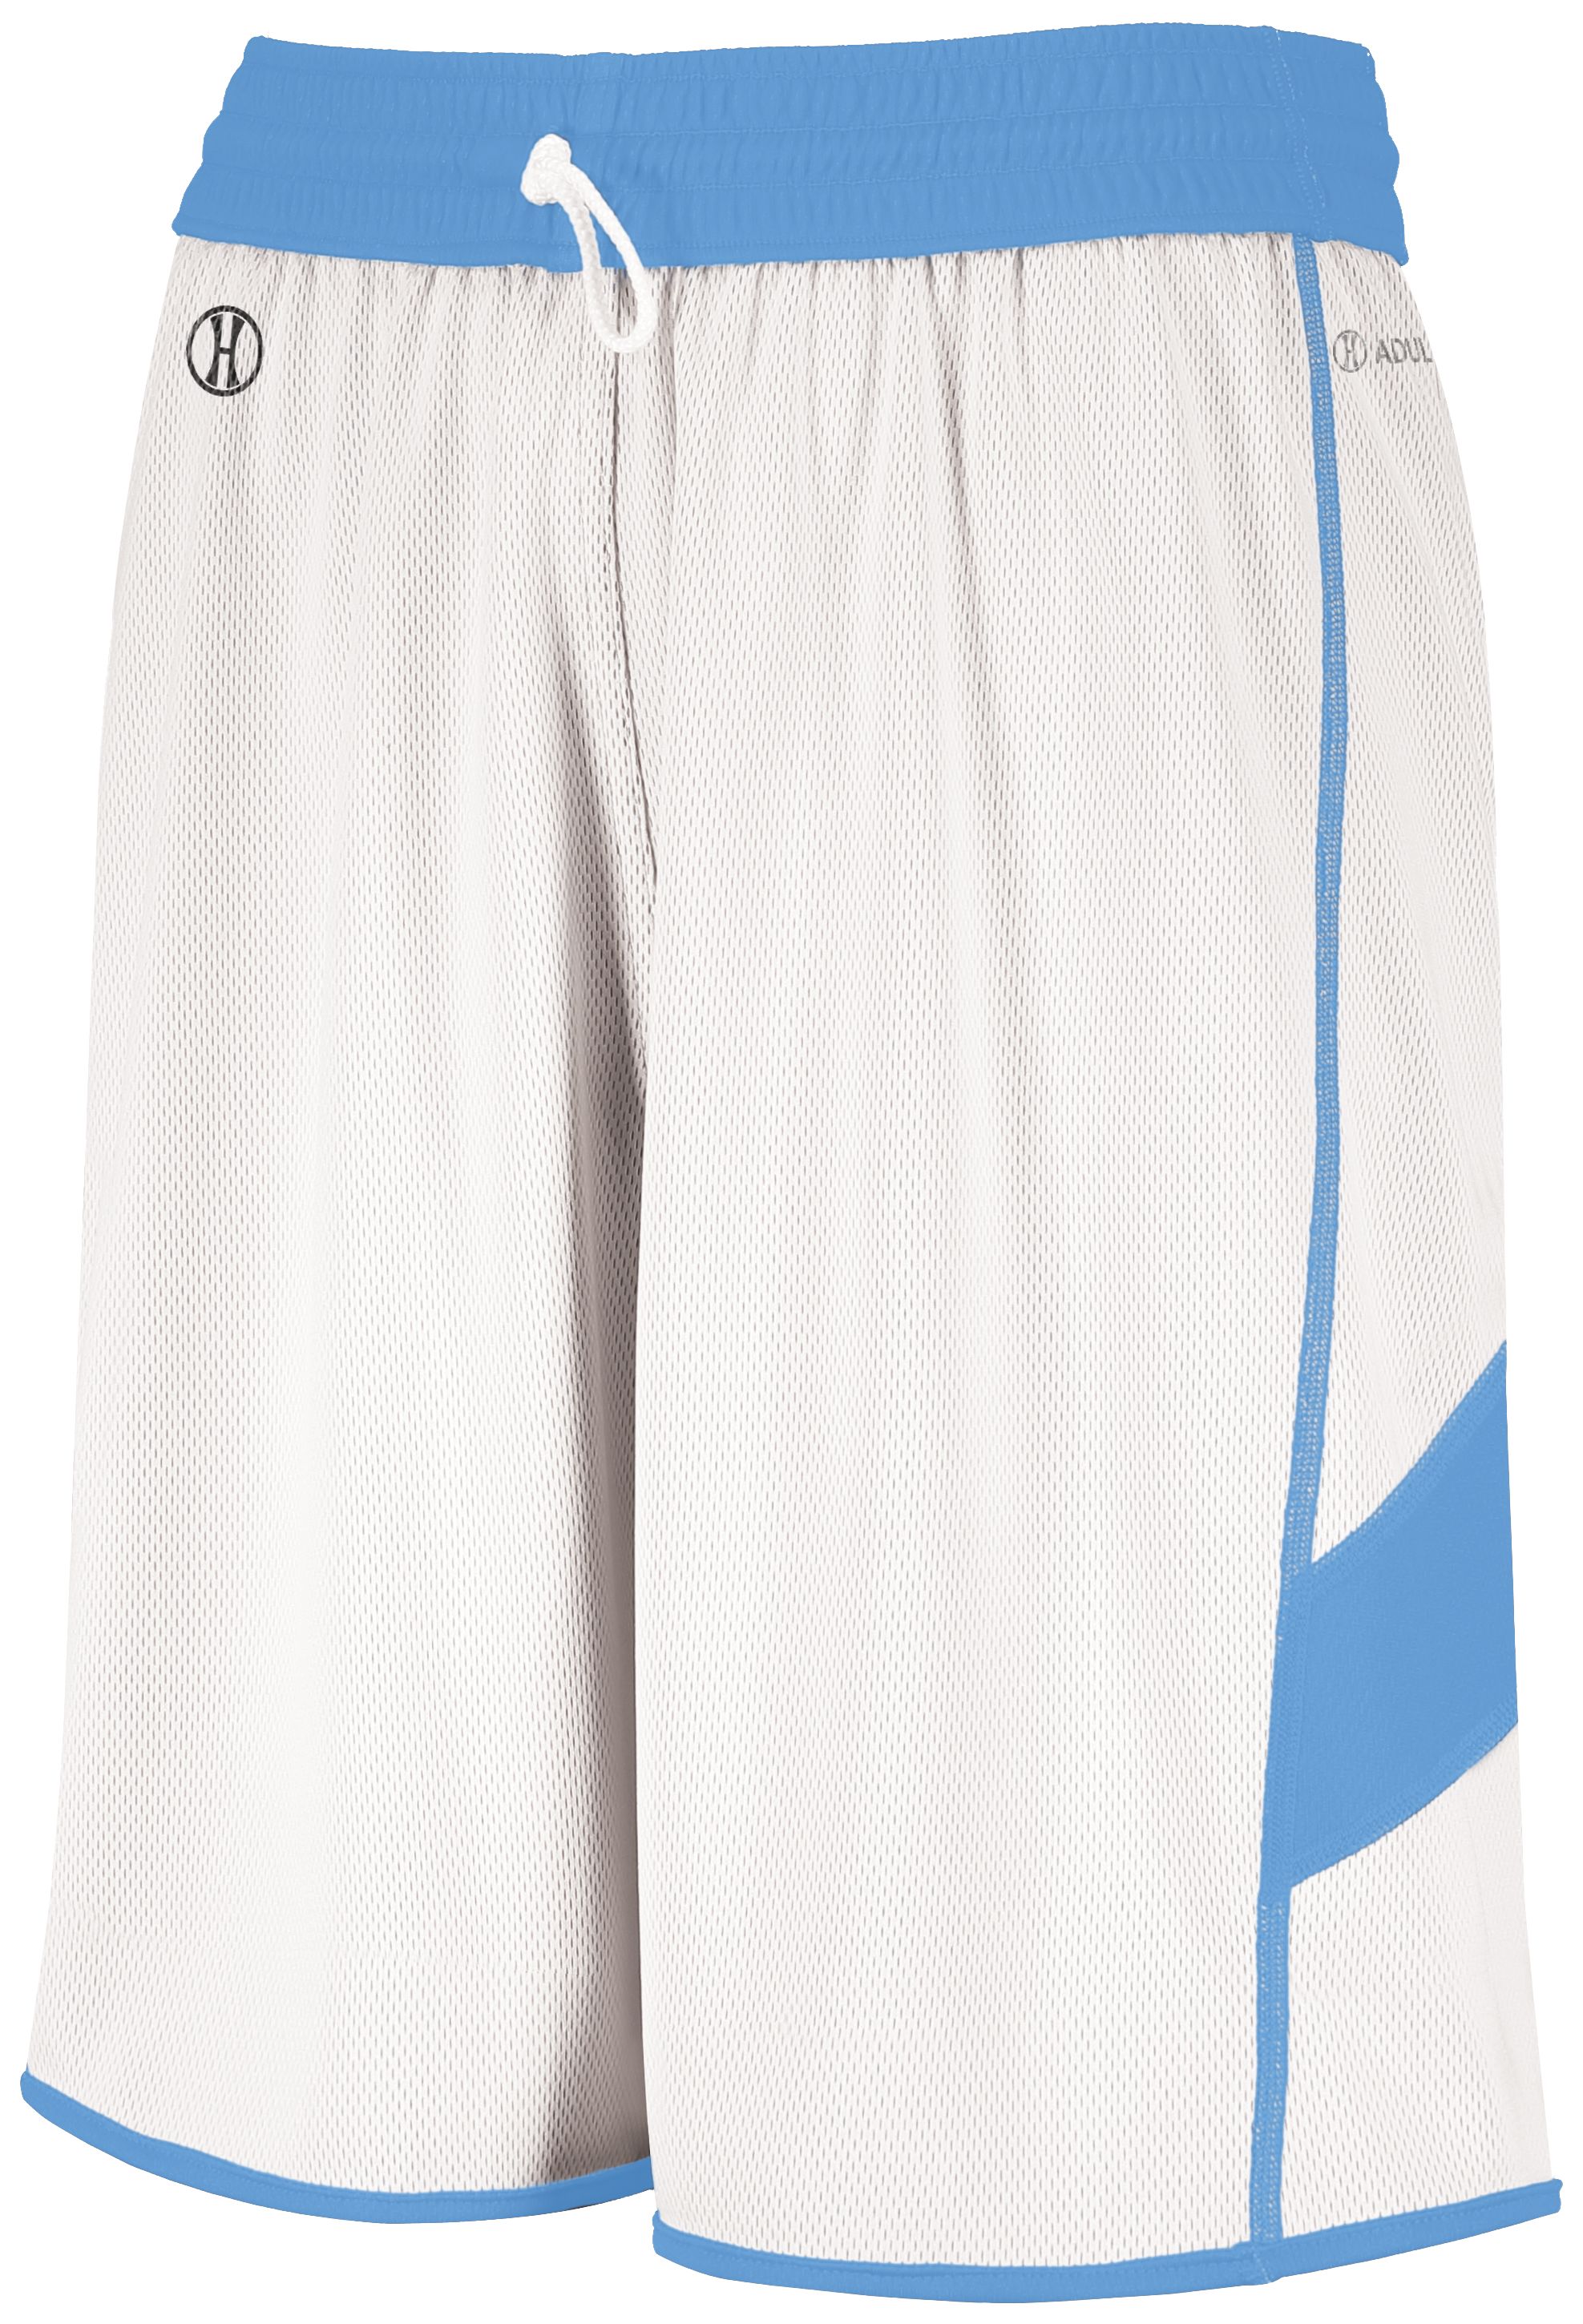 Holloway 224279 - Youth Dual-Side Single Ply Basketball Shorts